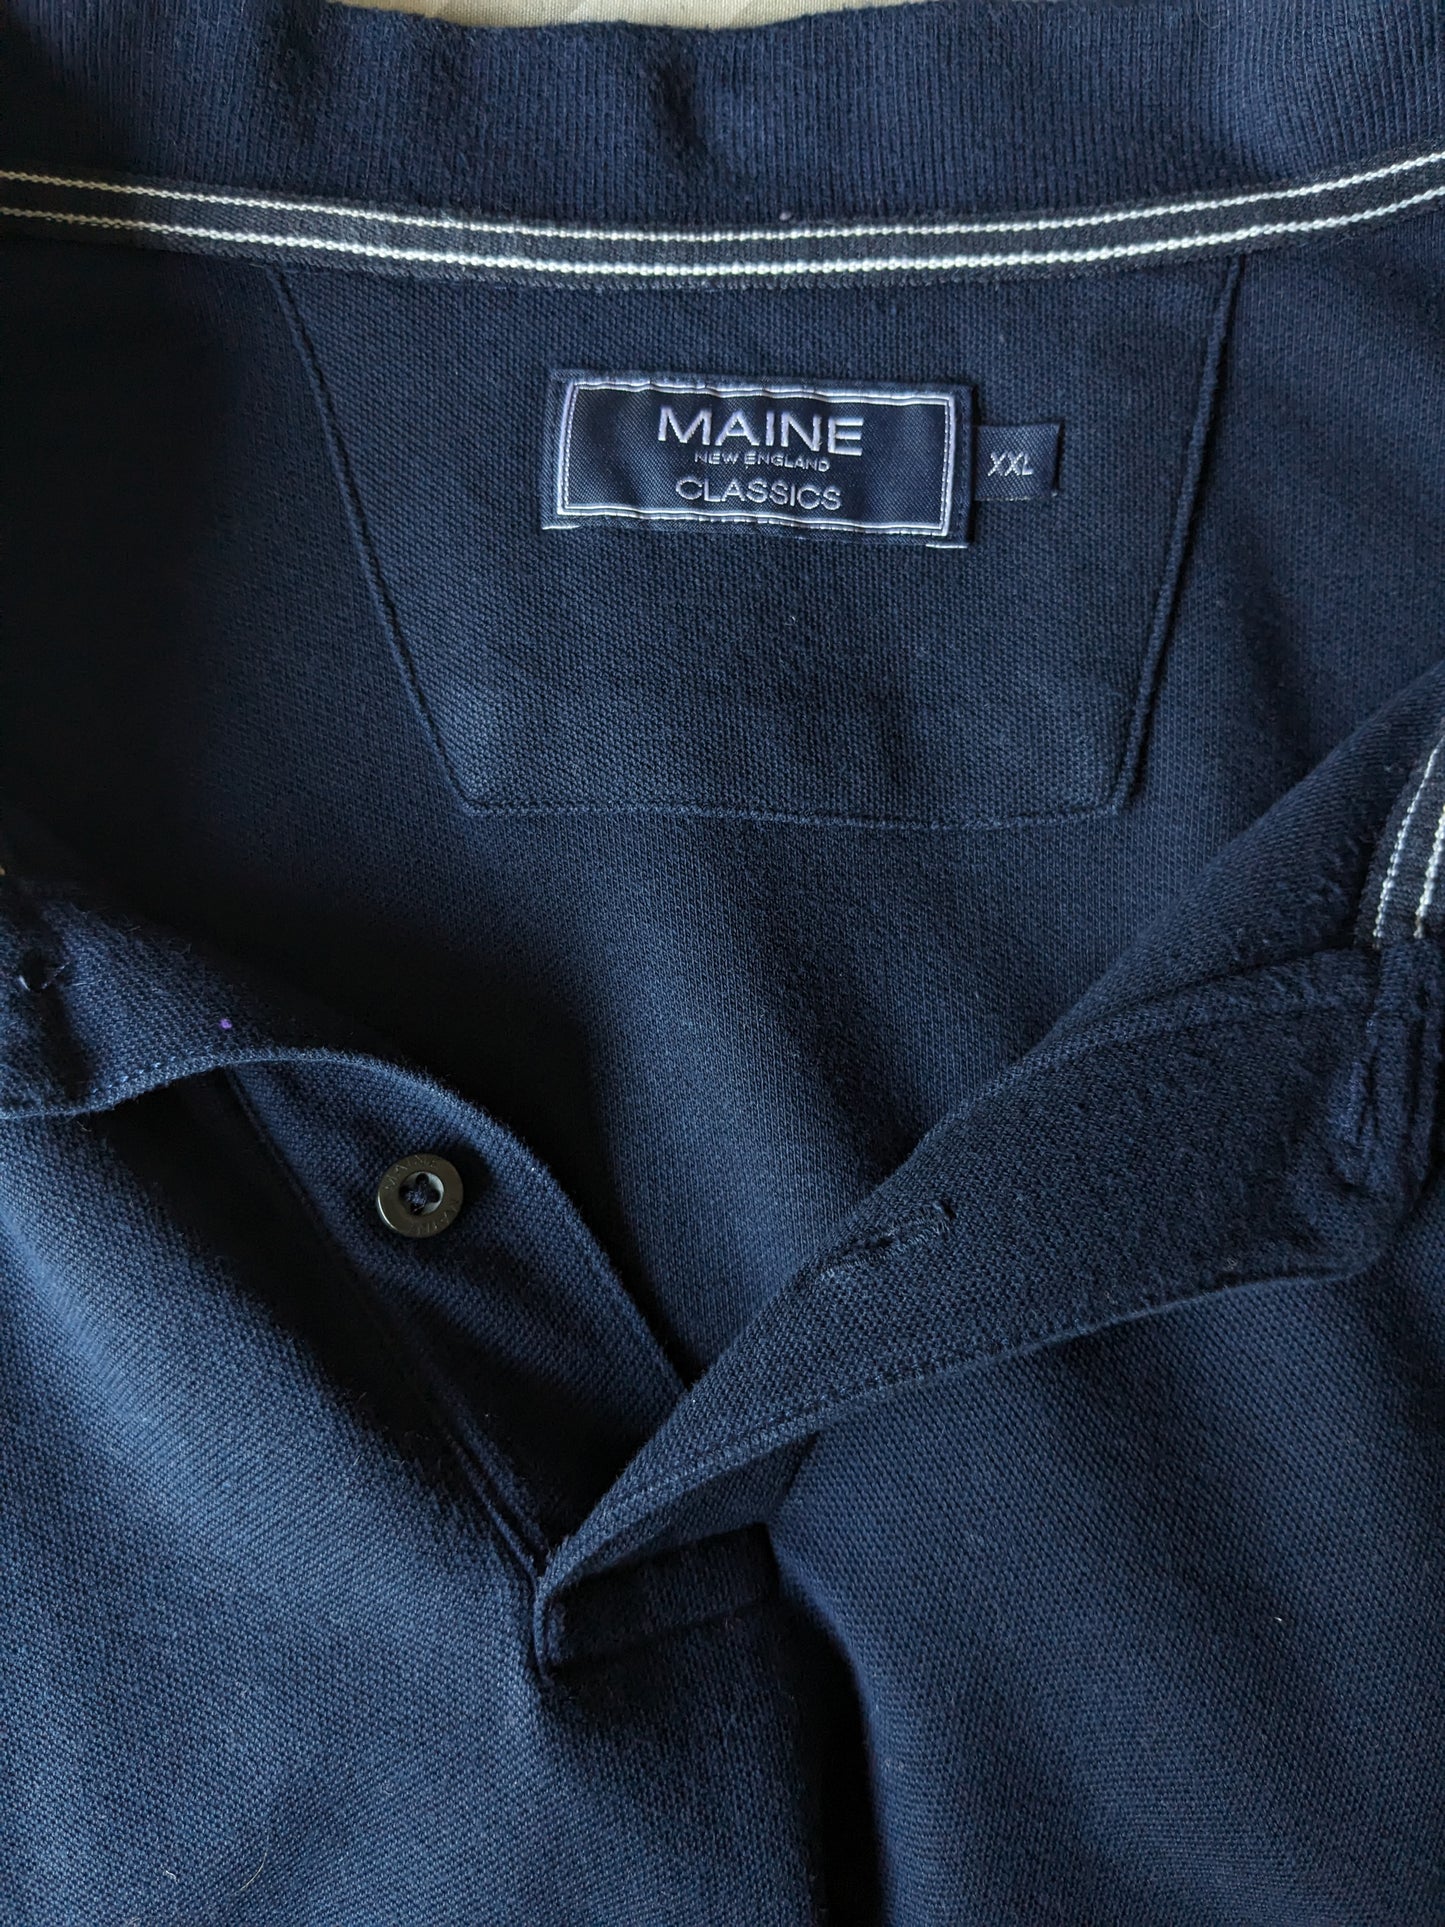 Maine Polo. Dark blue colored. Size 2XL / 3XL.